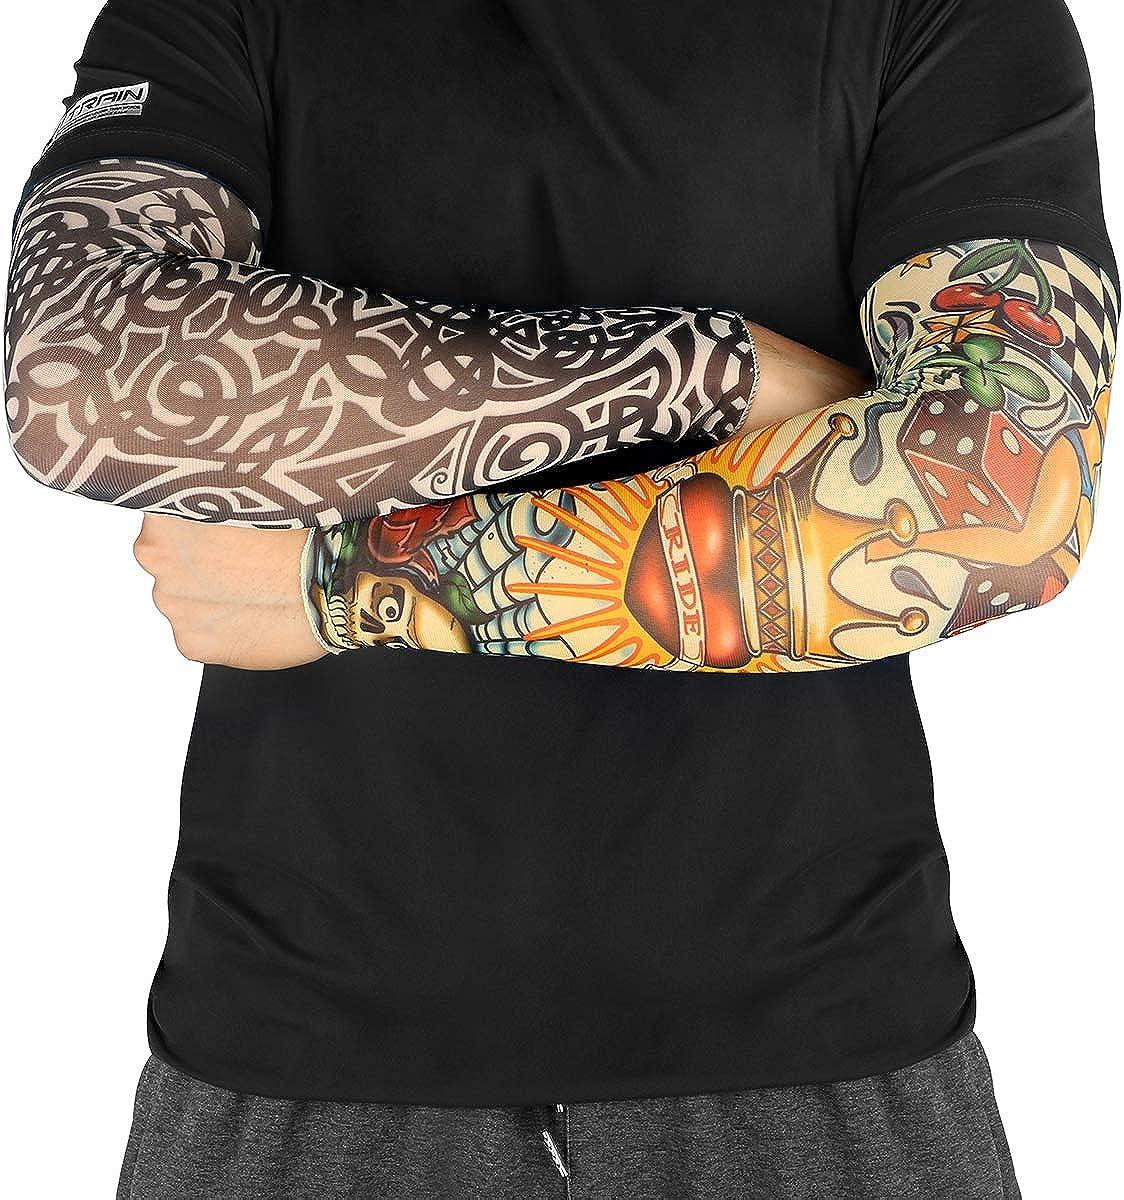 new fashion tattoo sleeve stocks custom| Alibaba.com